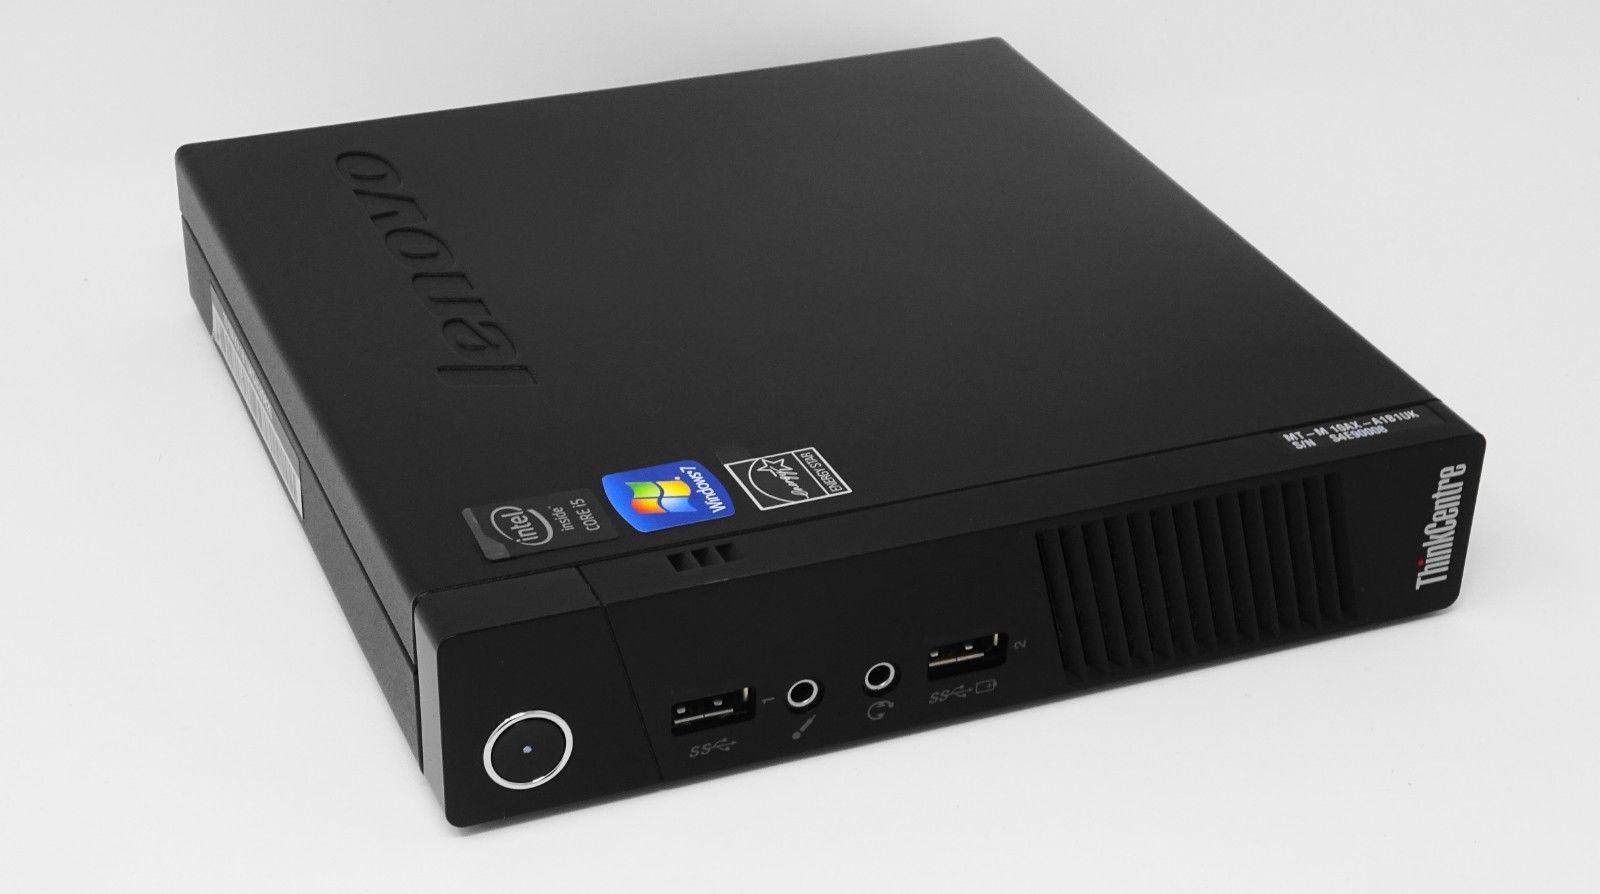 Lenovo ThinkCentre M73 Tiny / Mini PC i3 4130T 2.90GHz 4GB ram 500GB HDD  Win10 Pro in UK